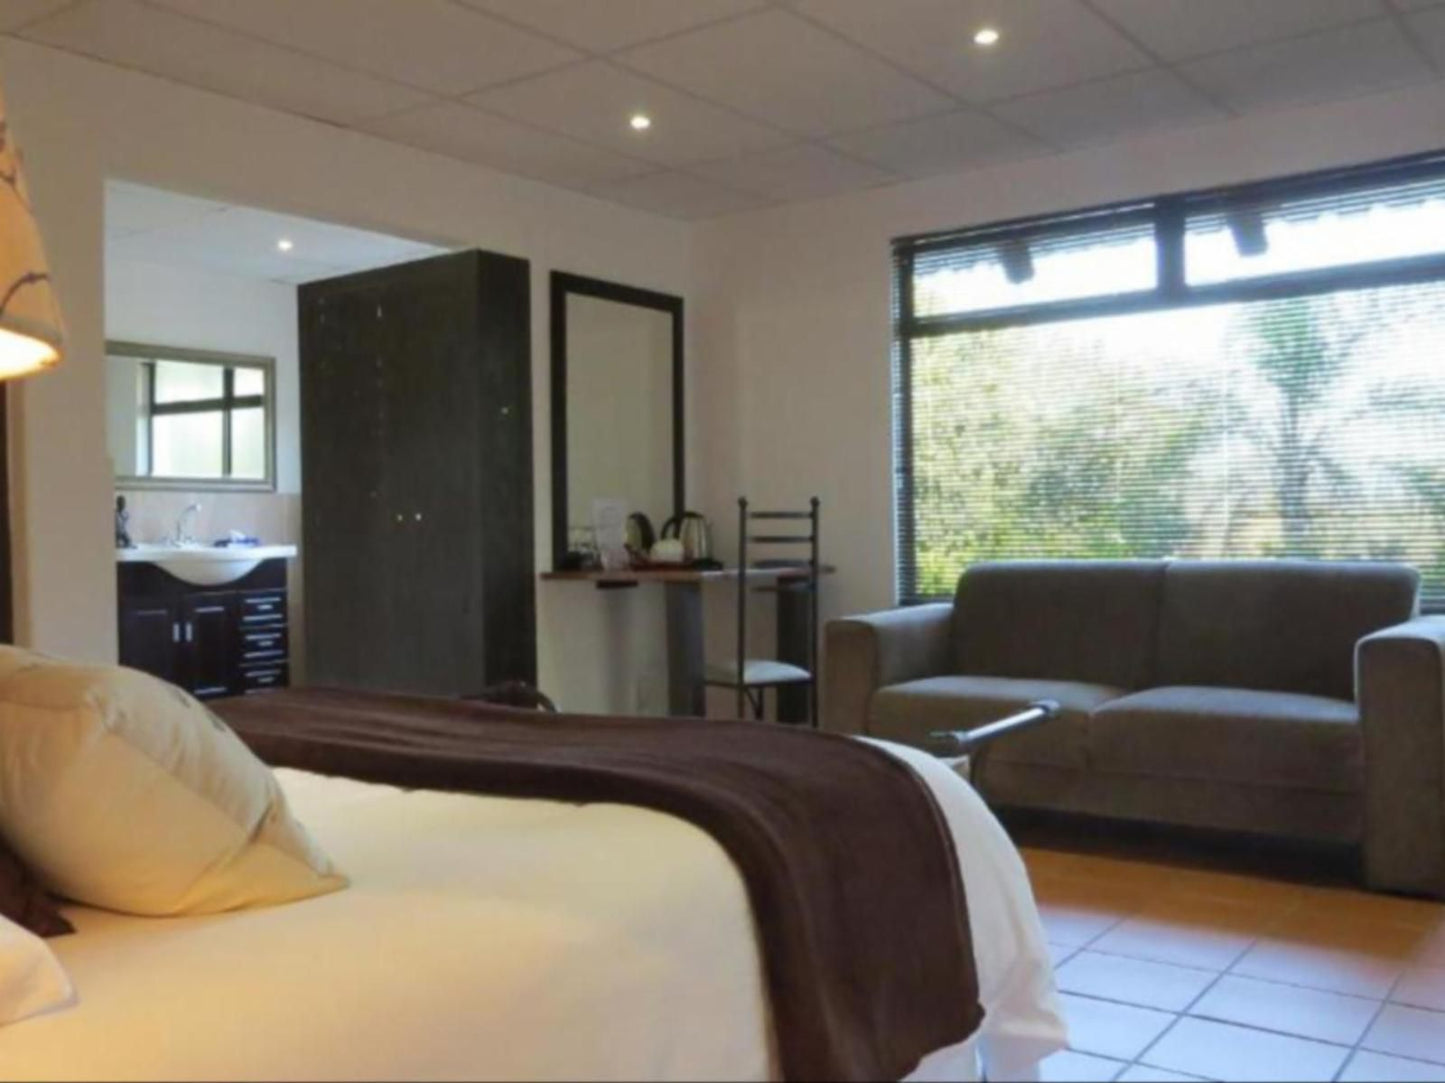 Pensao Guest Lodge Sonheuwel Nelspruit Mpumalanga South Africa Bedroom